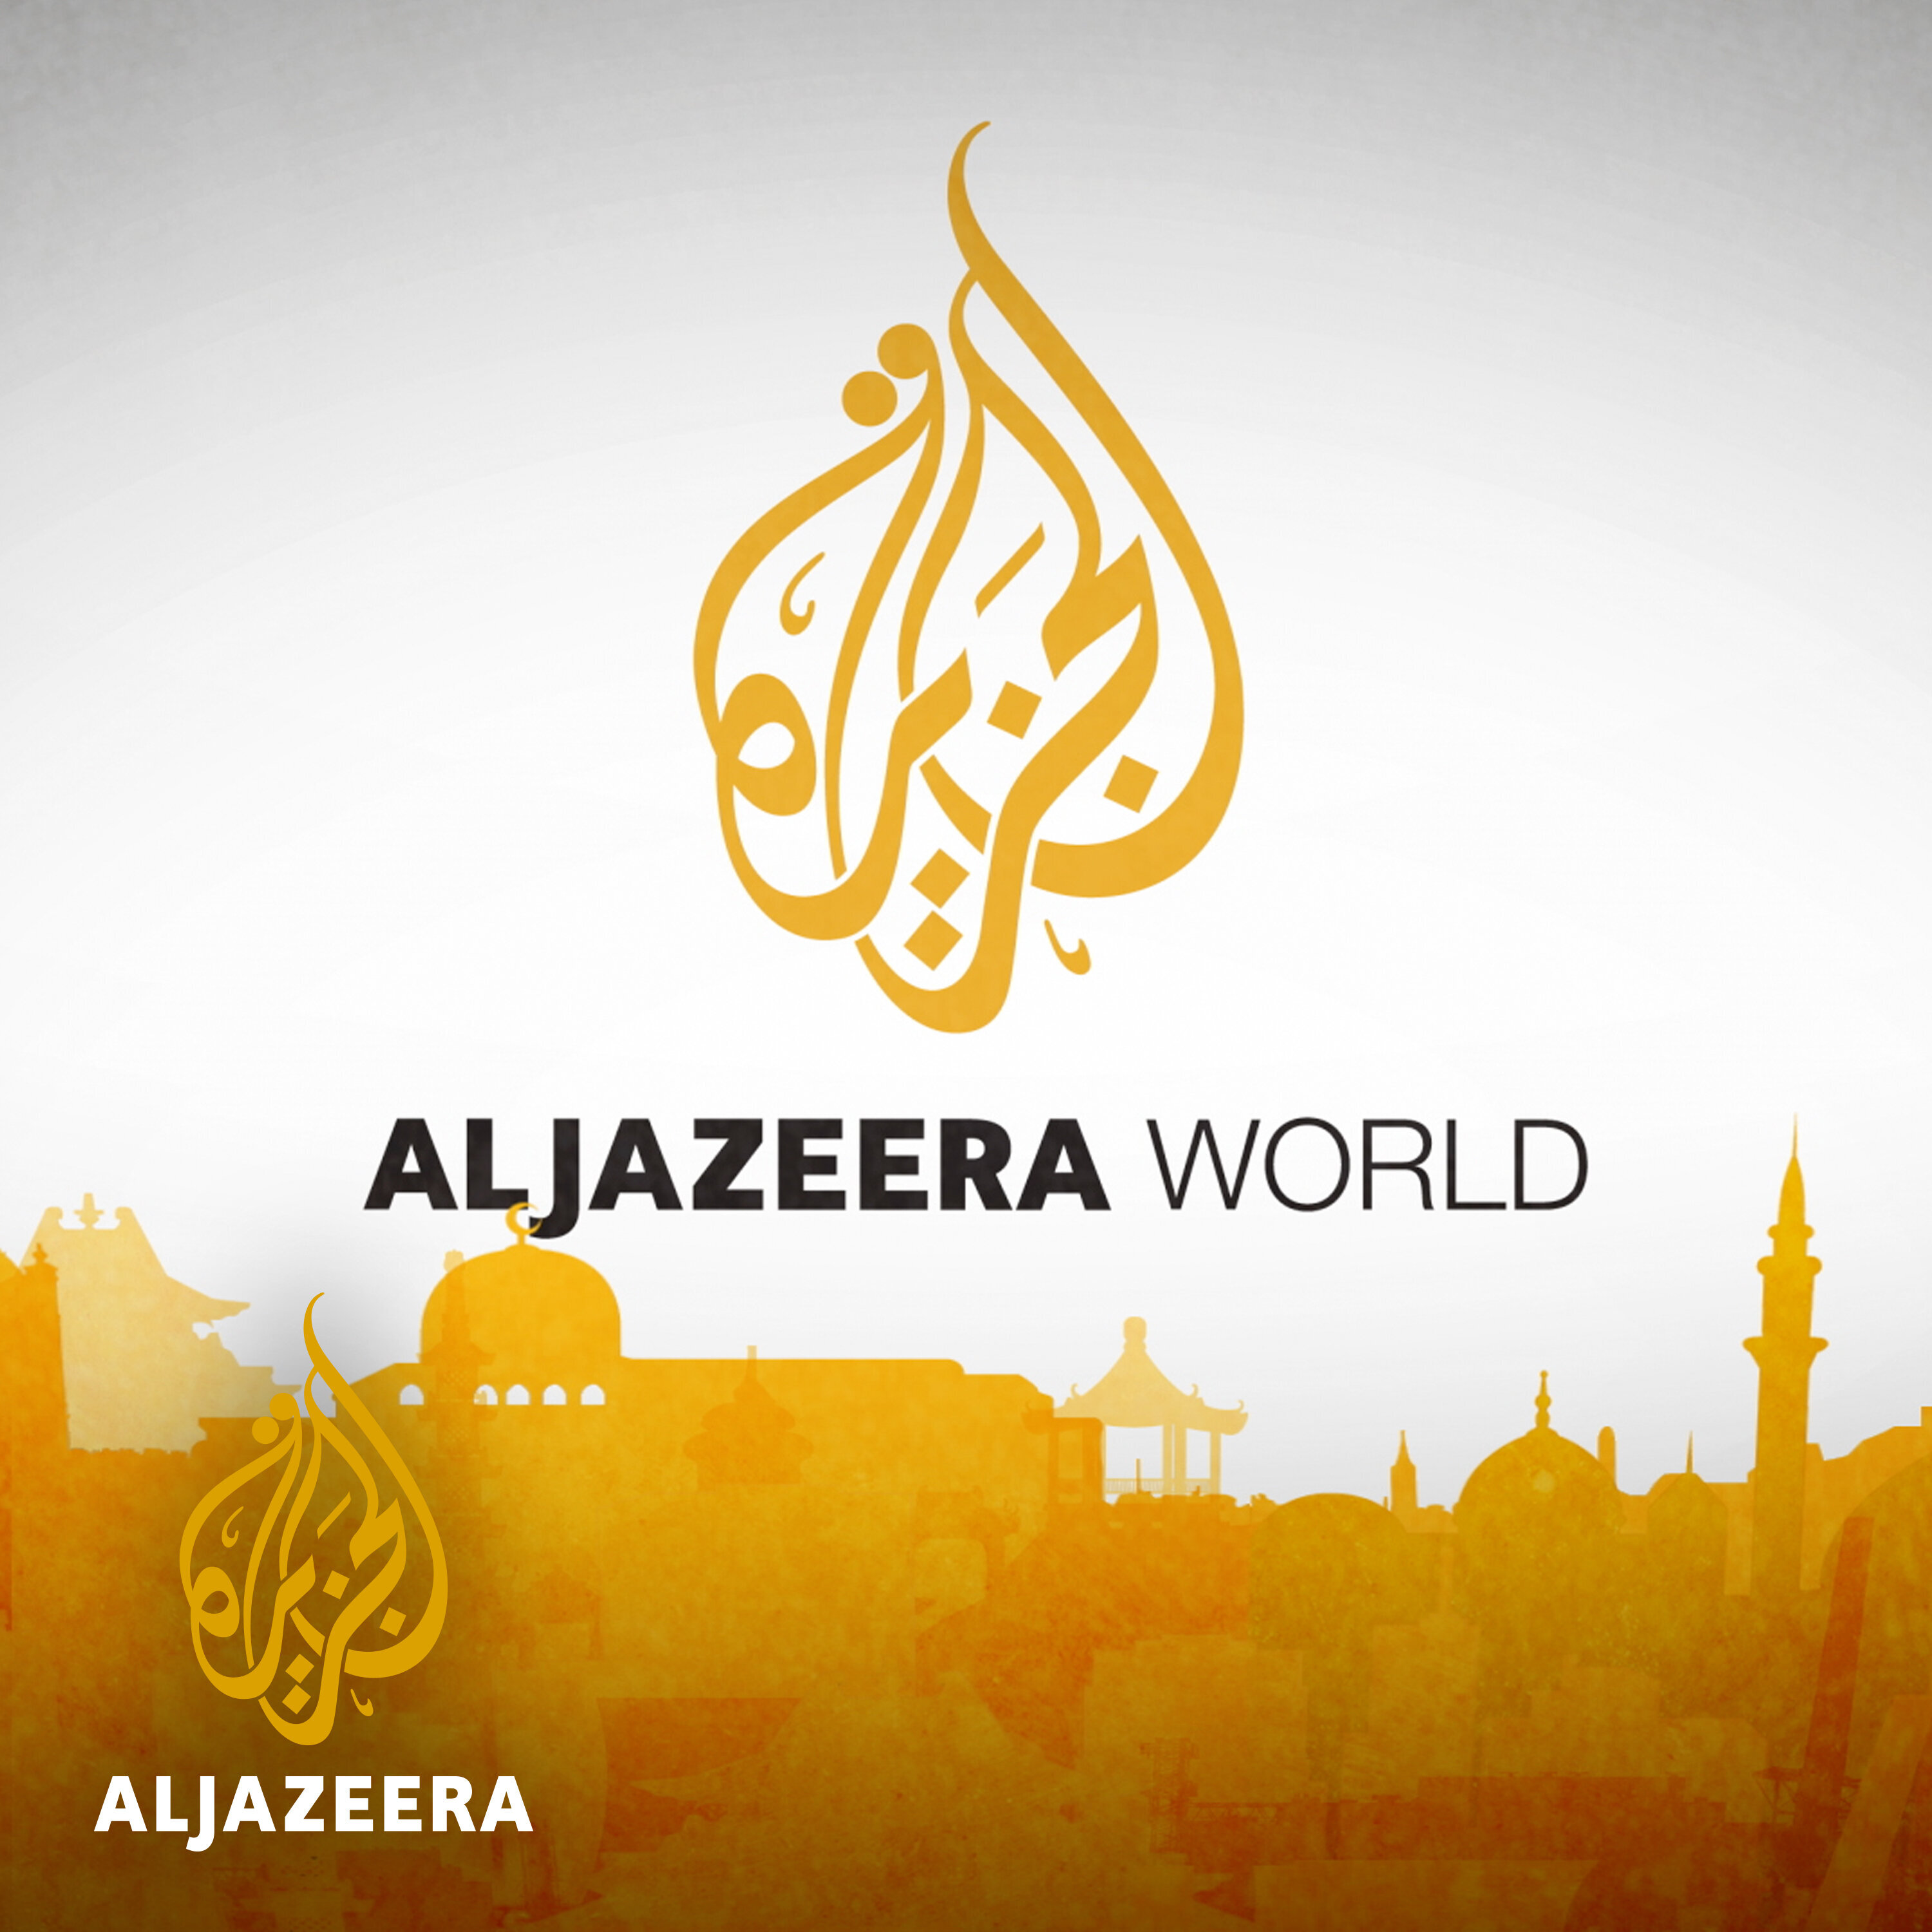 South Africa: The Imam Who Fought Apartheid | Al Jazeera World